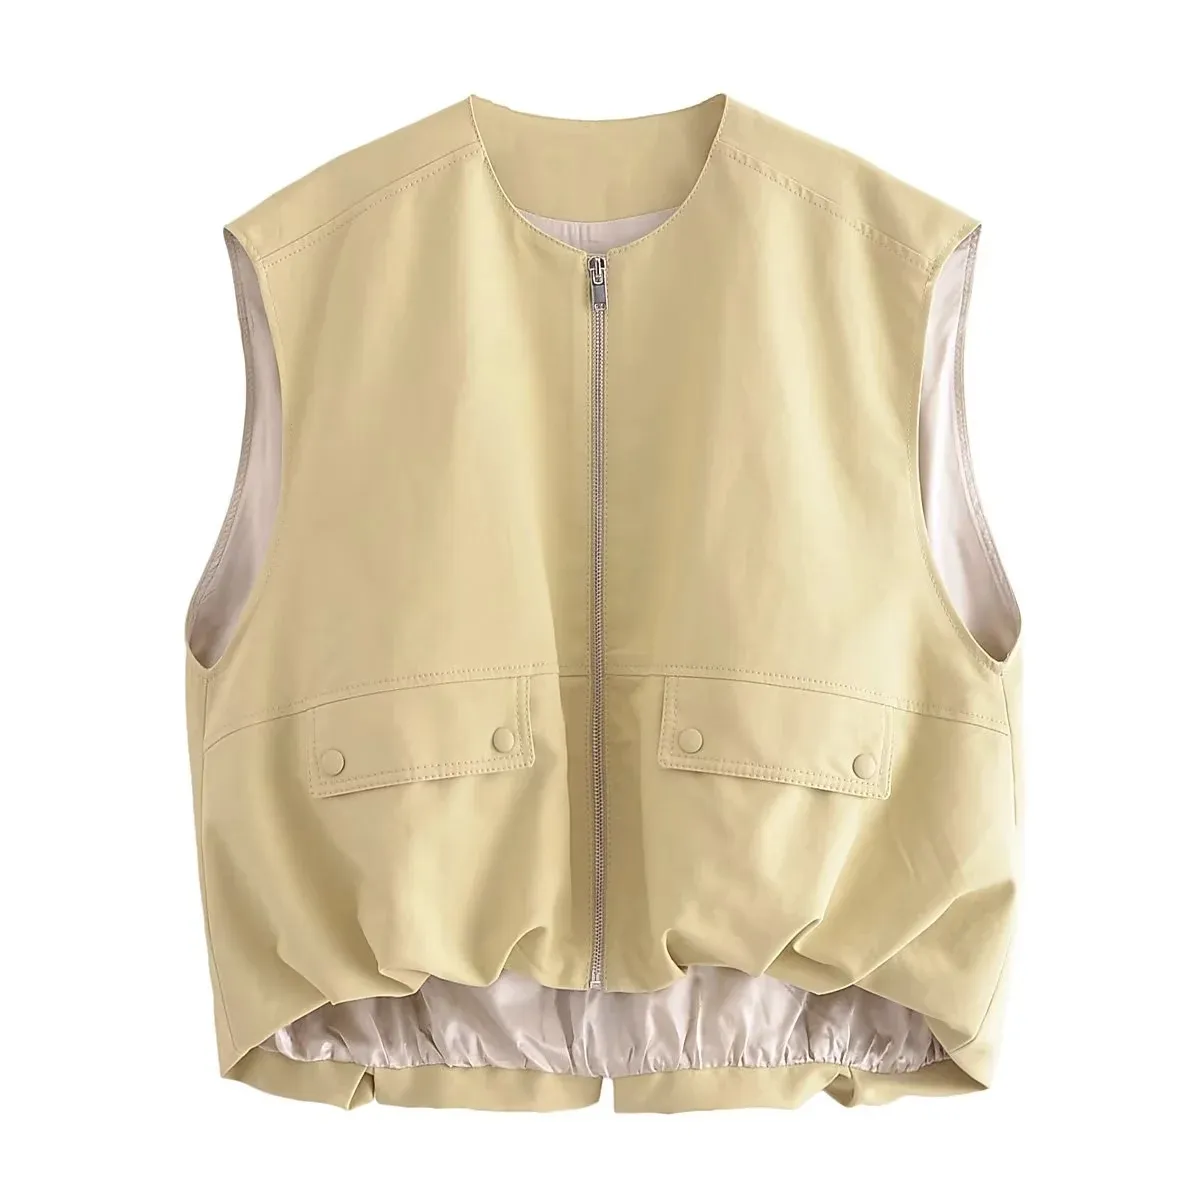 KAOPU ZA Women with pockets front zipper waistcoat vintage sleeveless gathered hem female outerwear chic vest tops